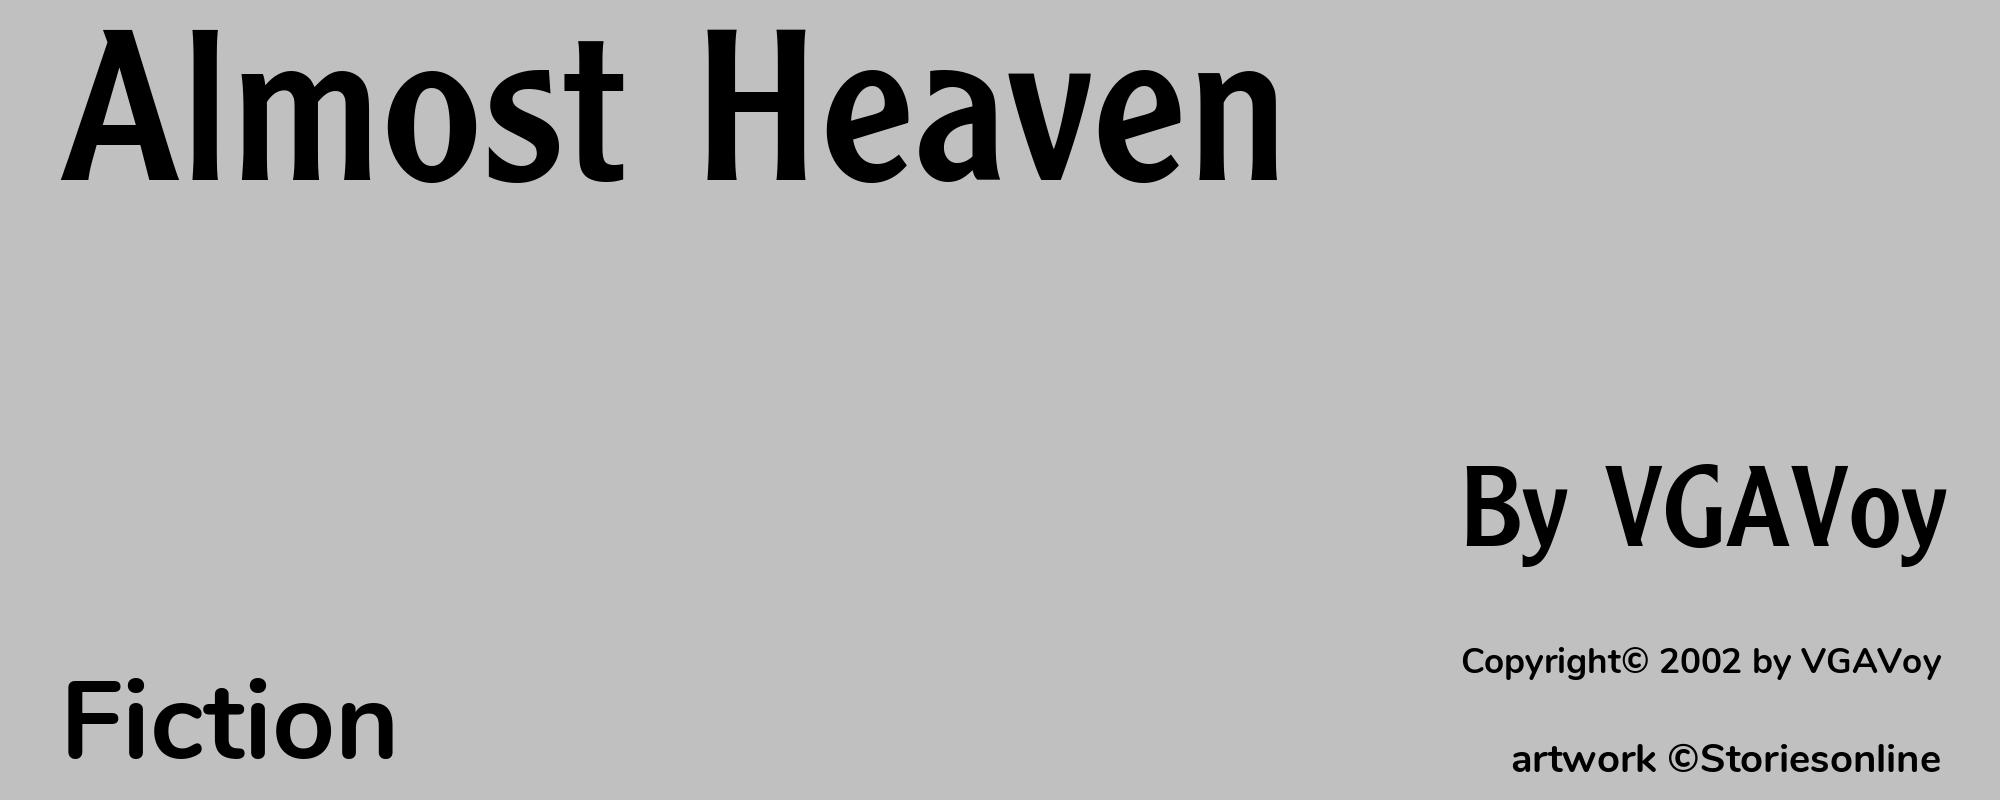 Almost Heaven - Cover